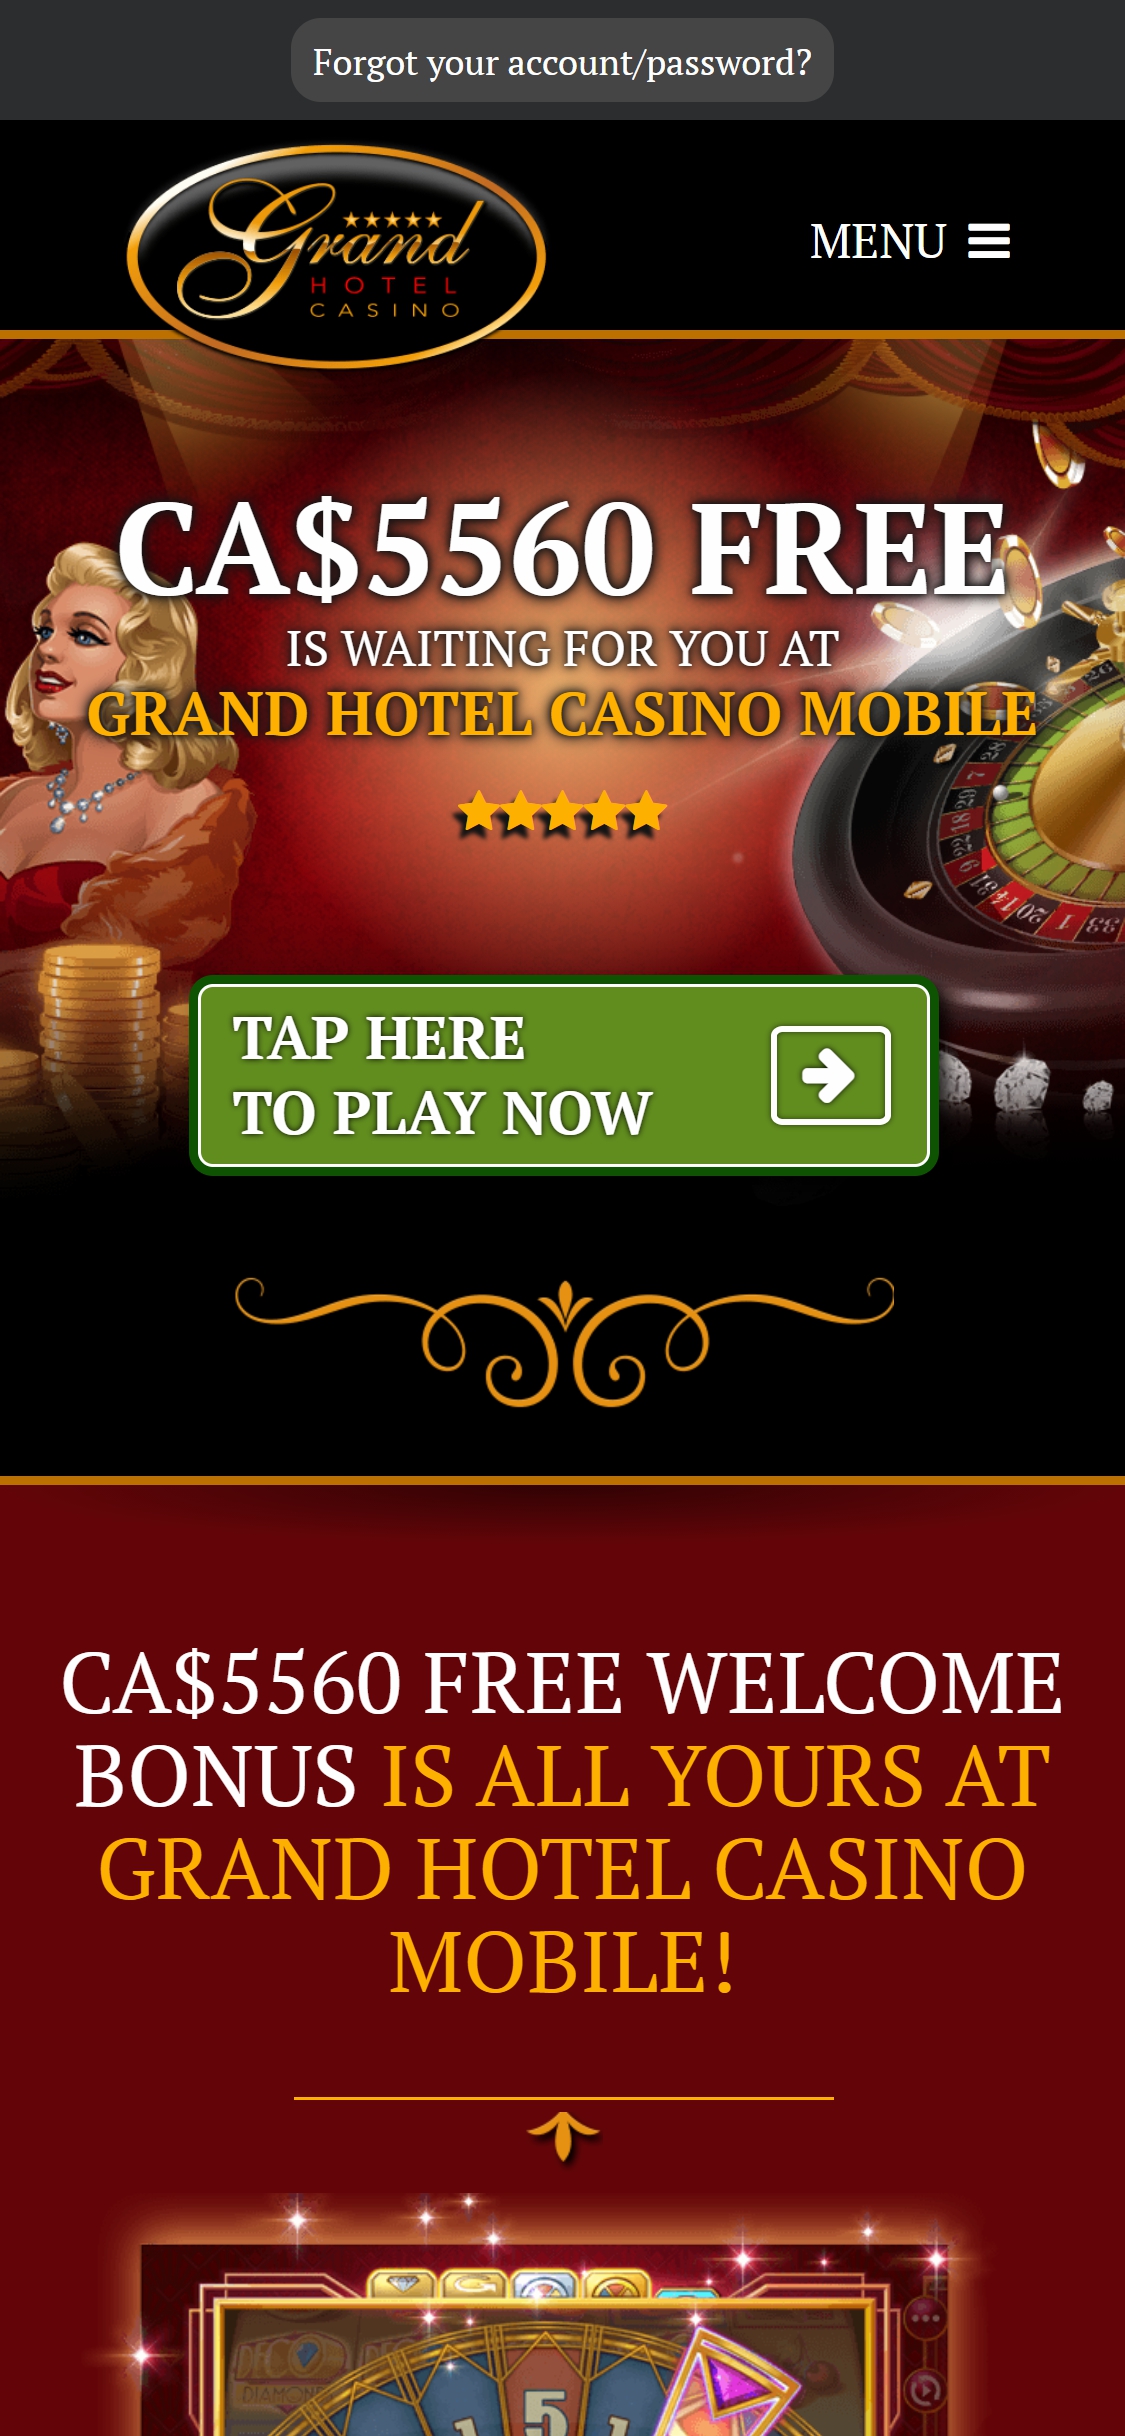 Grand Hotel Casino Mobile Review